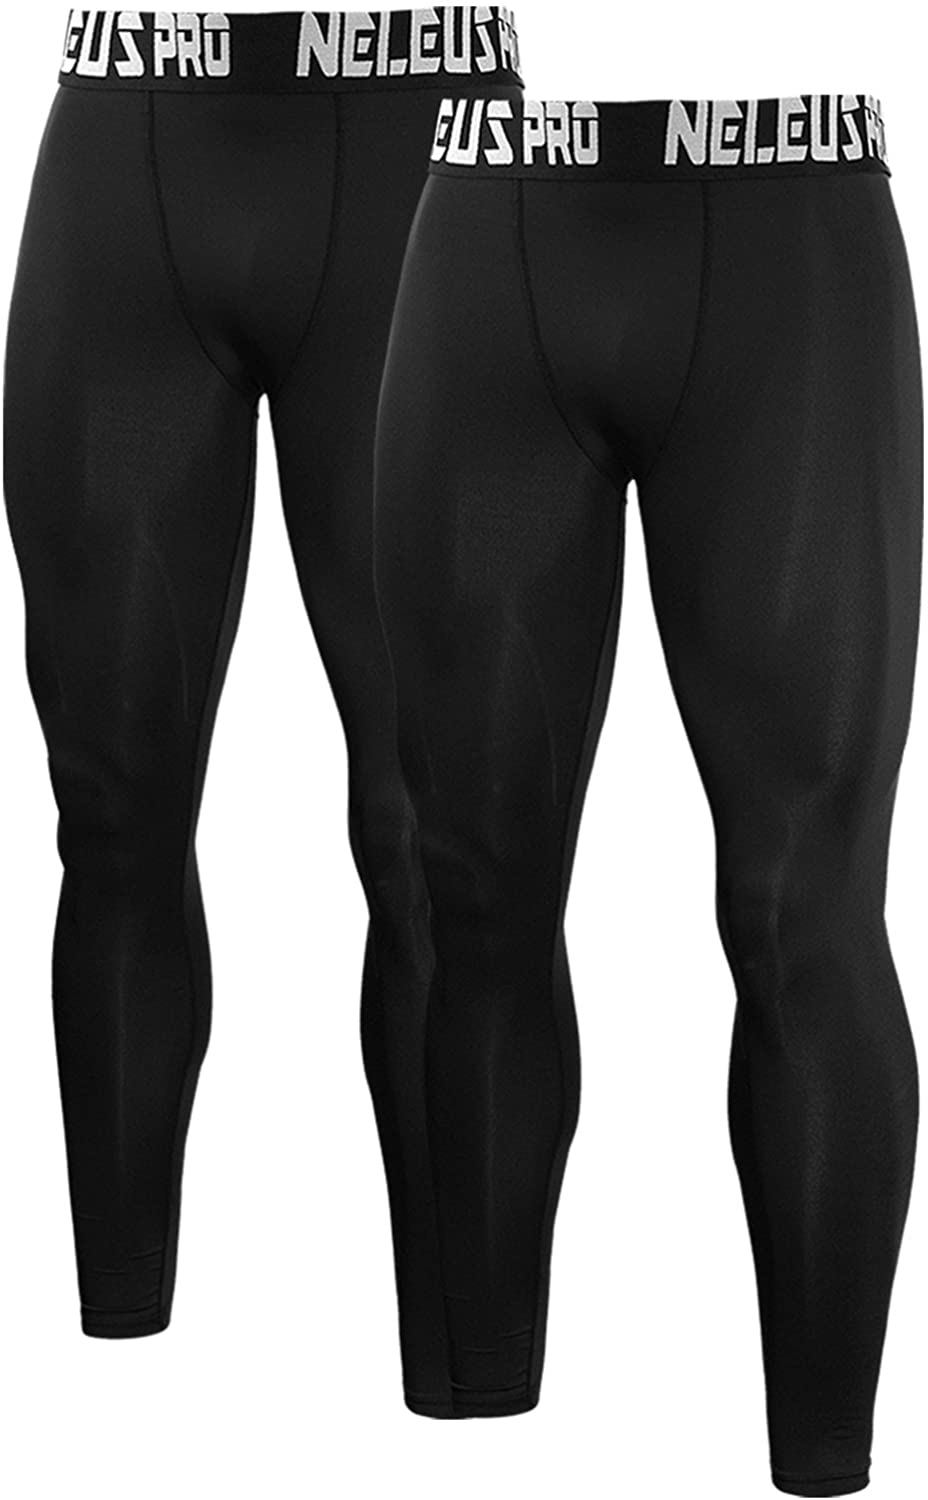 Neleus Men's 3 Pack Compression Pants Running Tights Sport Leggings6019BlackR... 